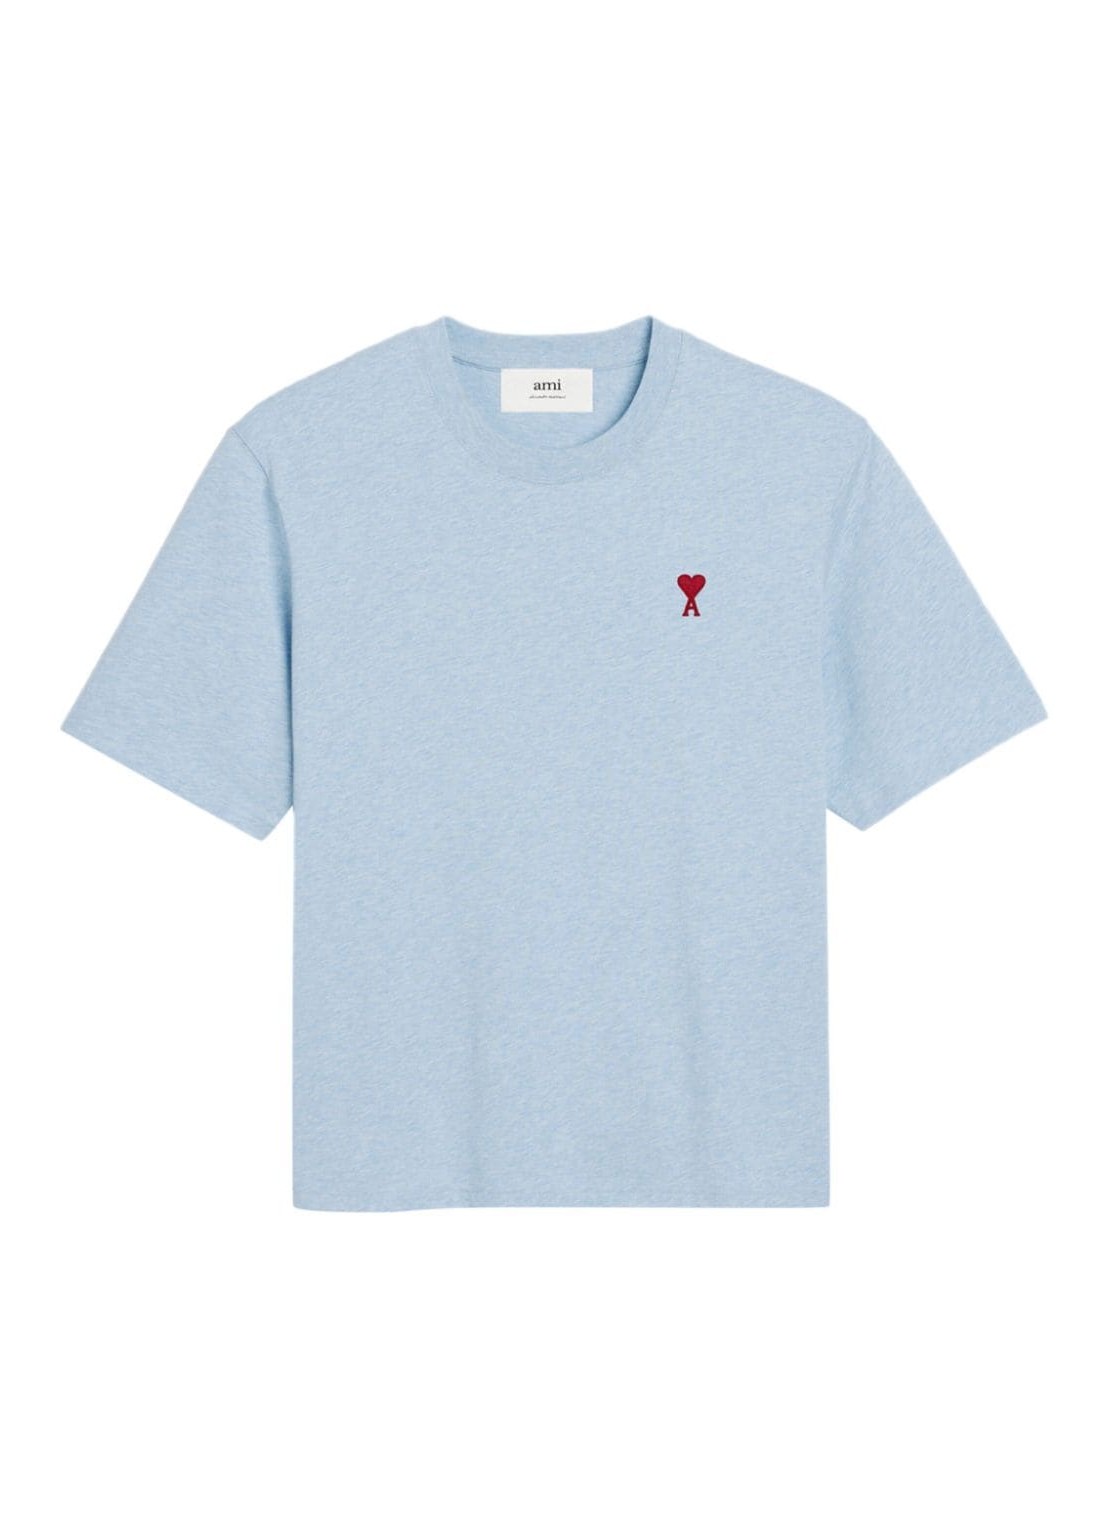 Camiseta ami t-shirt man red ami de coeur tshirt uts005726 4842 talla Azul
 